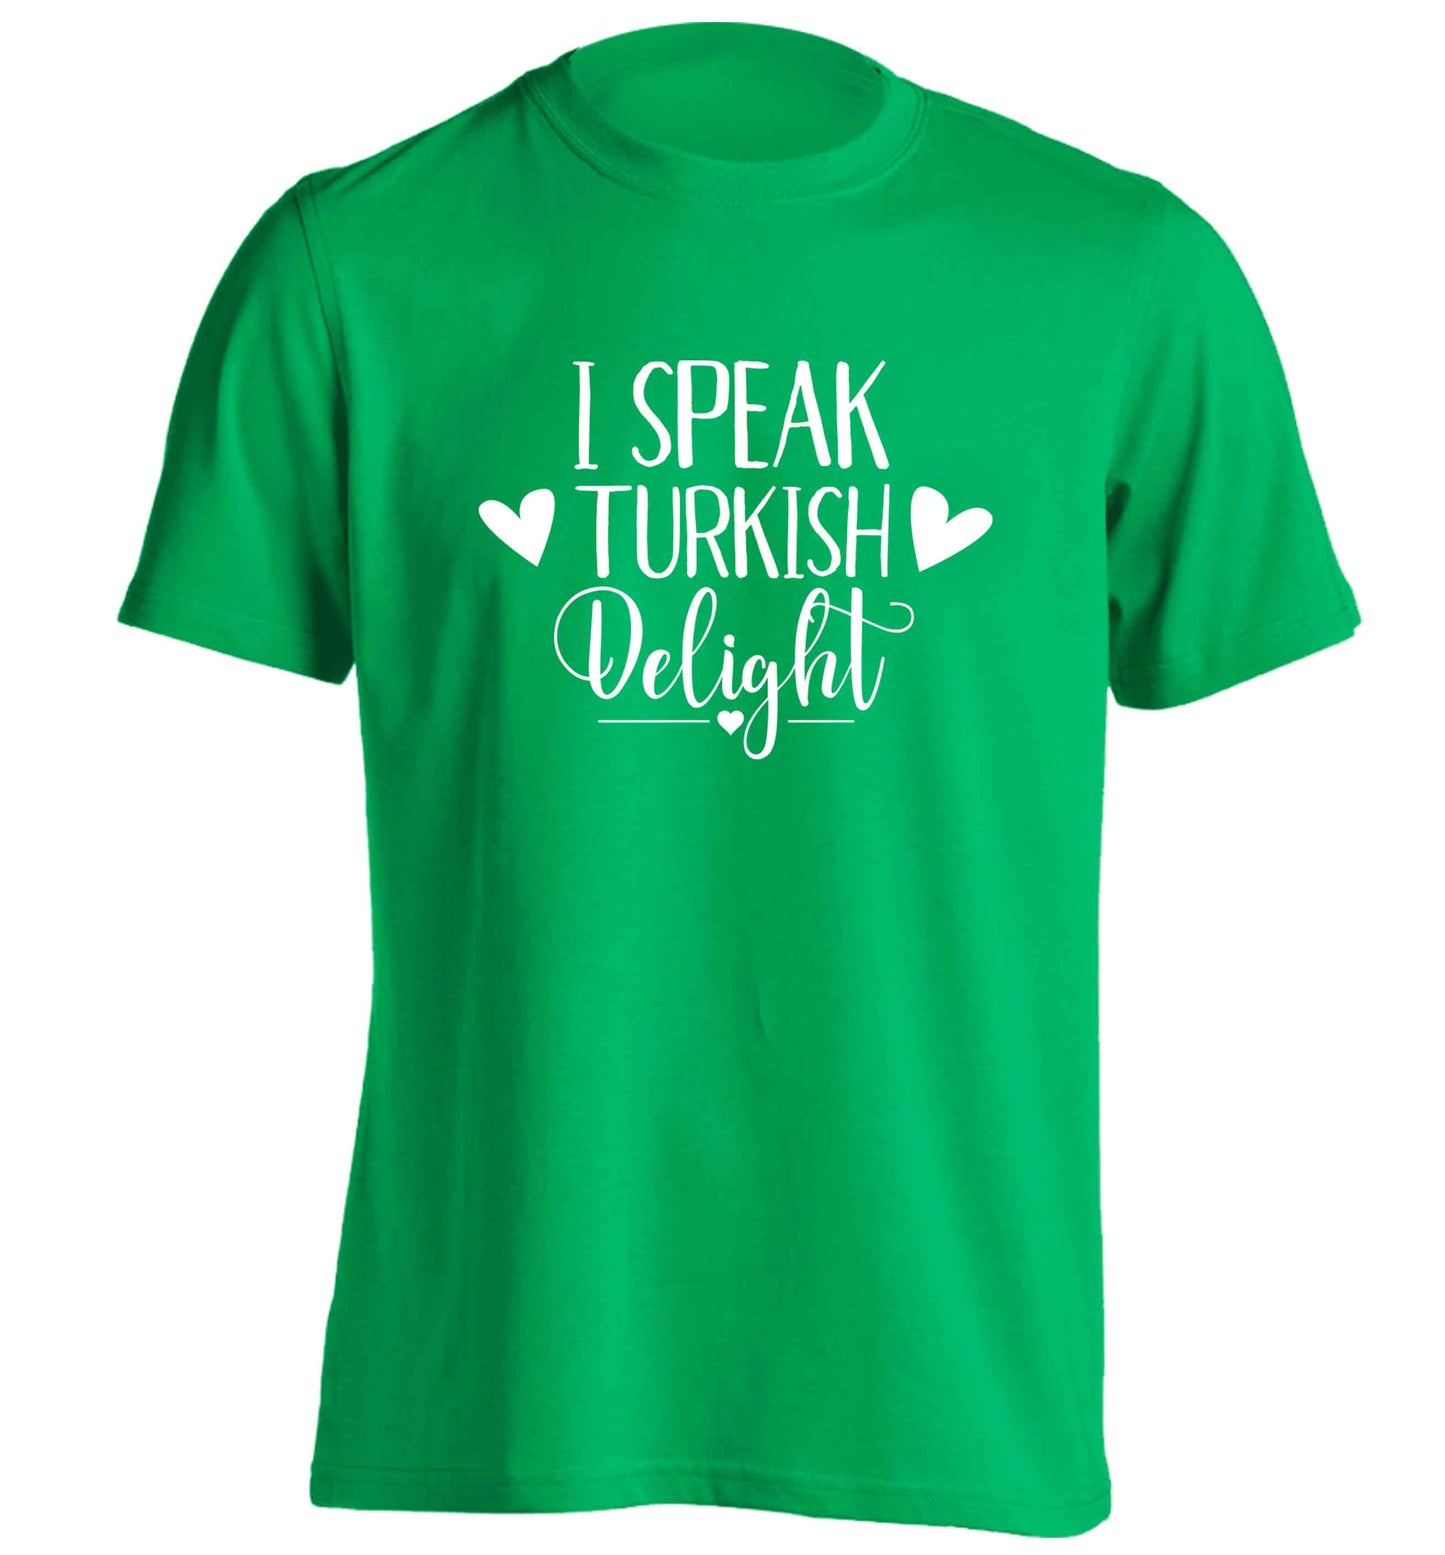 I speak turkish...delight adults unisex green Tshirt 2XL